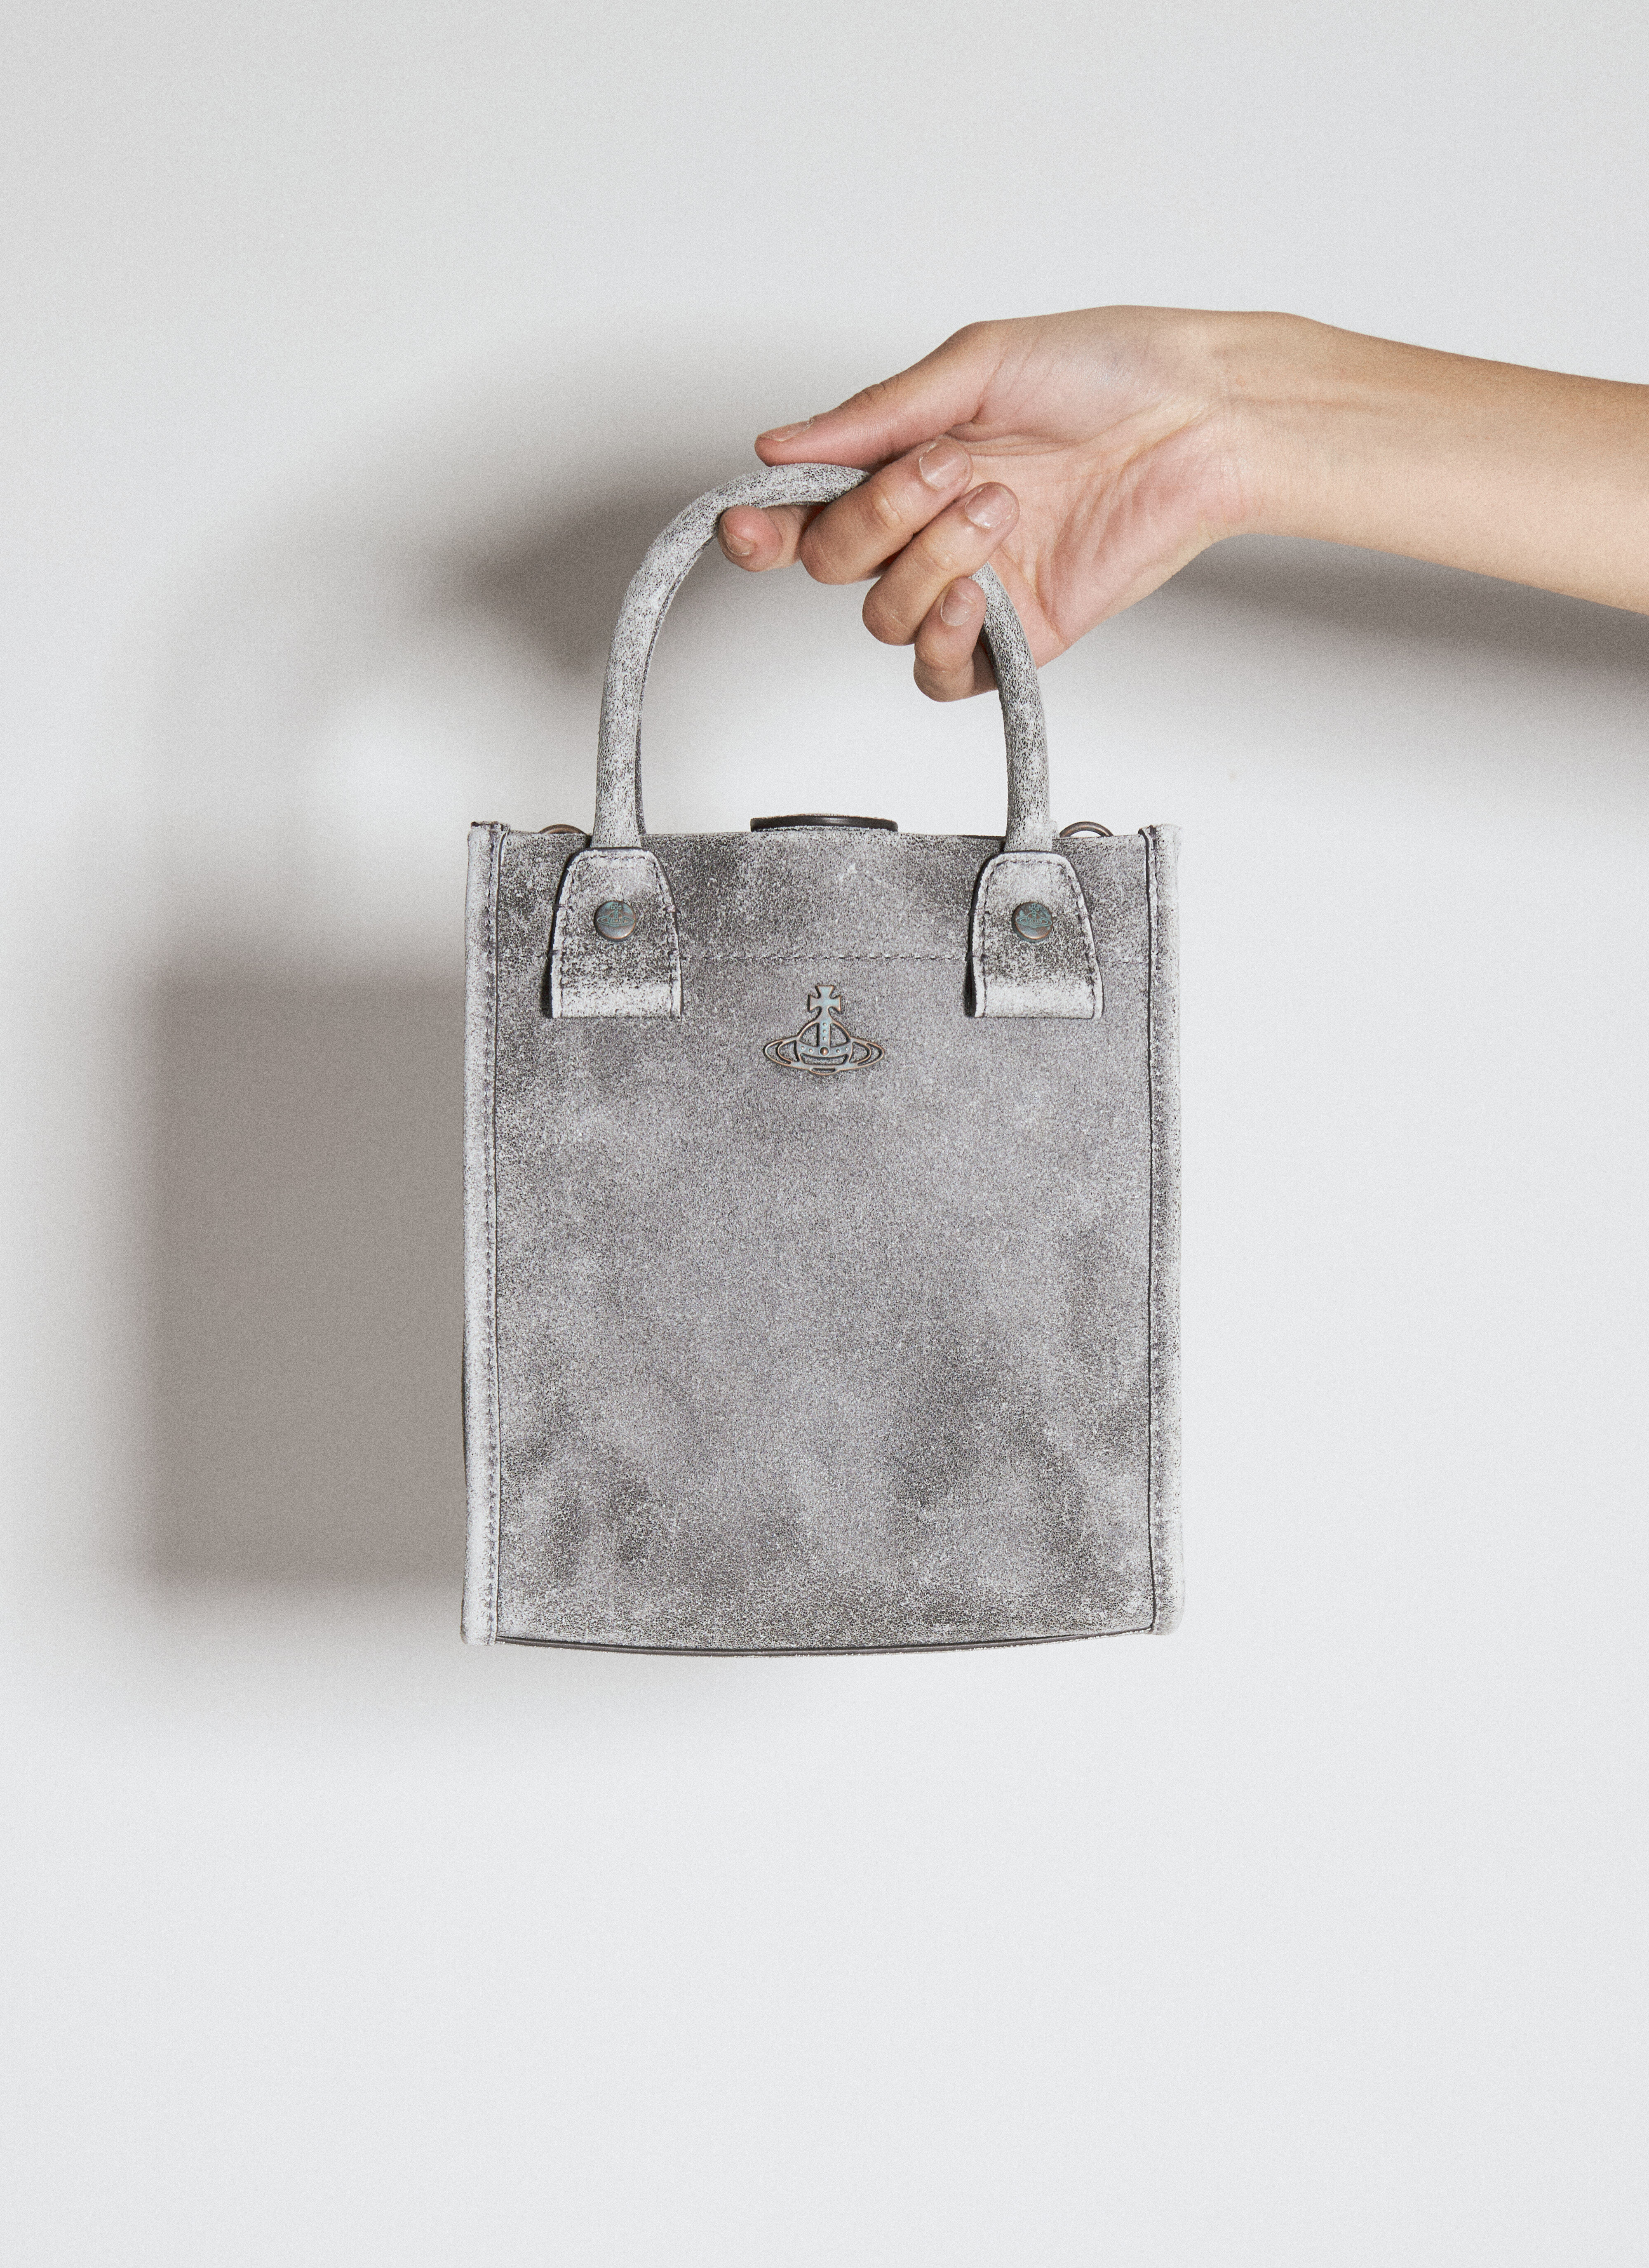 Vivienne Westwood women's bags sale | Shop online at THEBS [iKRIX]